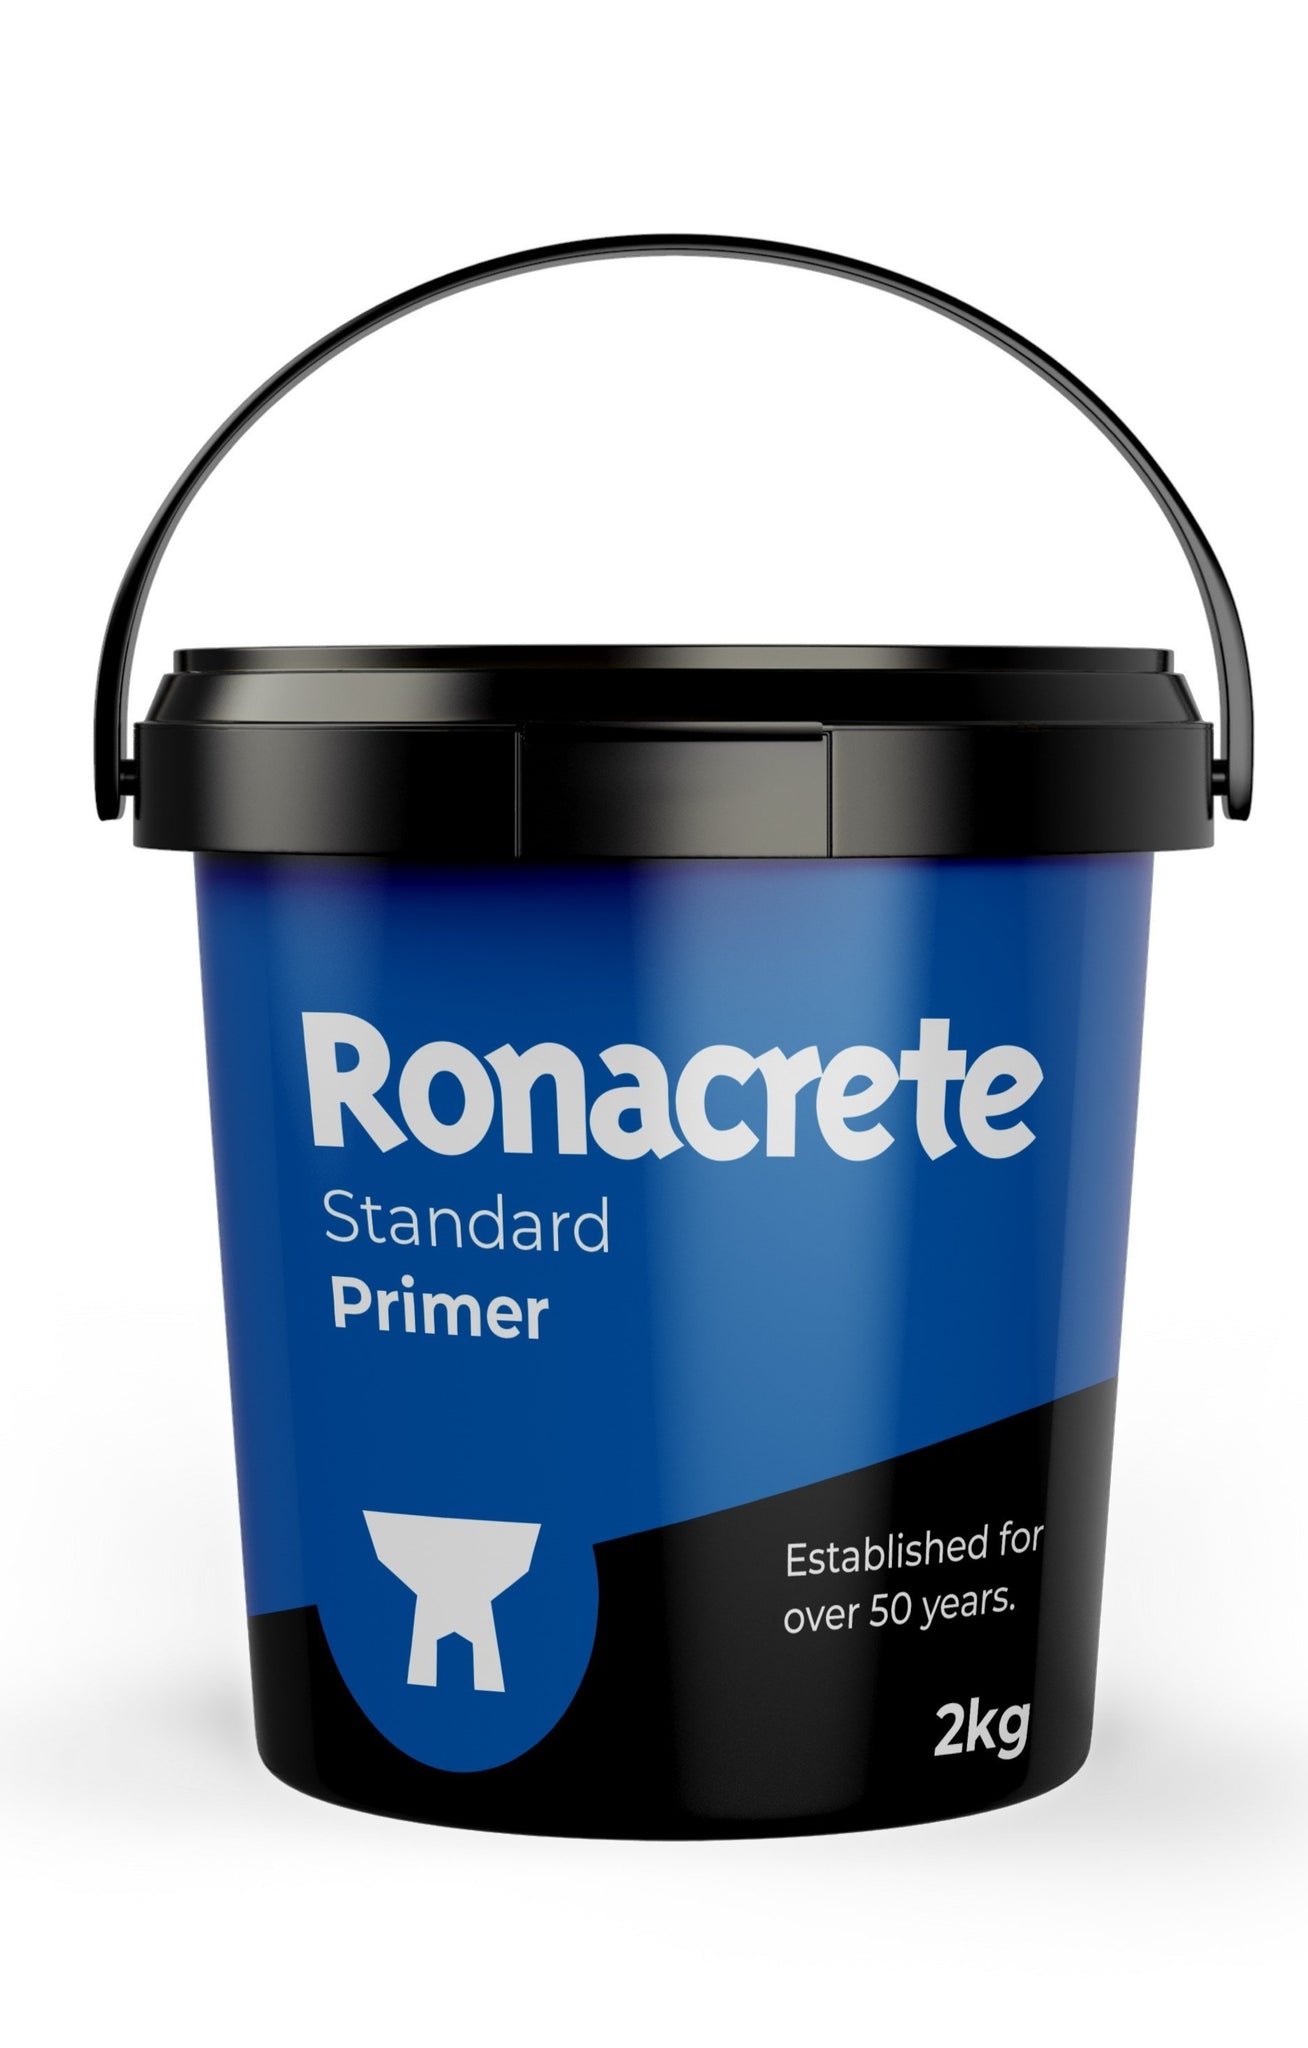 Ronacrete Standard Primer - Prebagged cementitious bonding primer